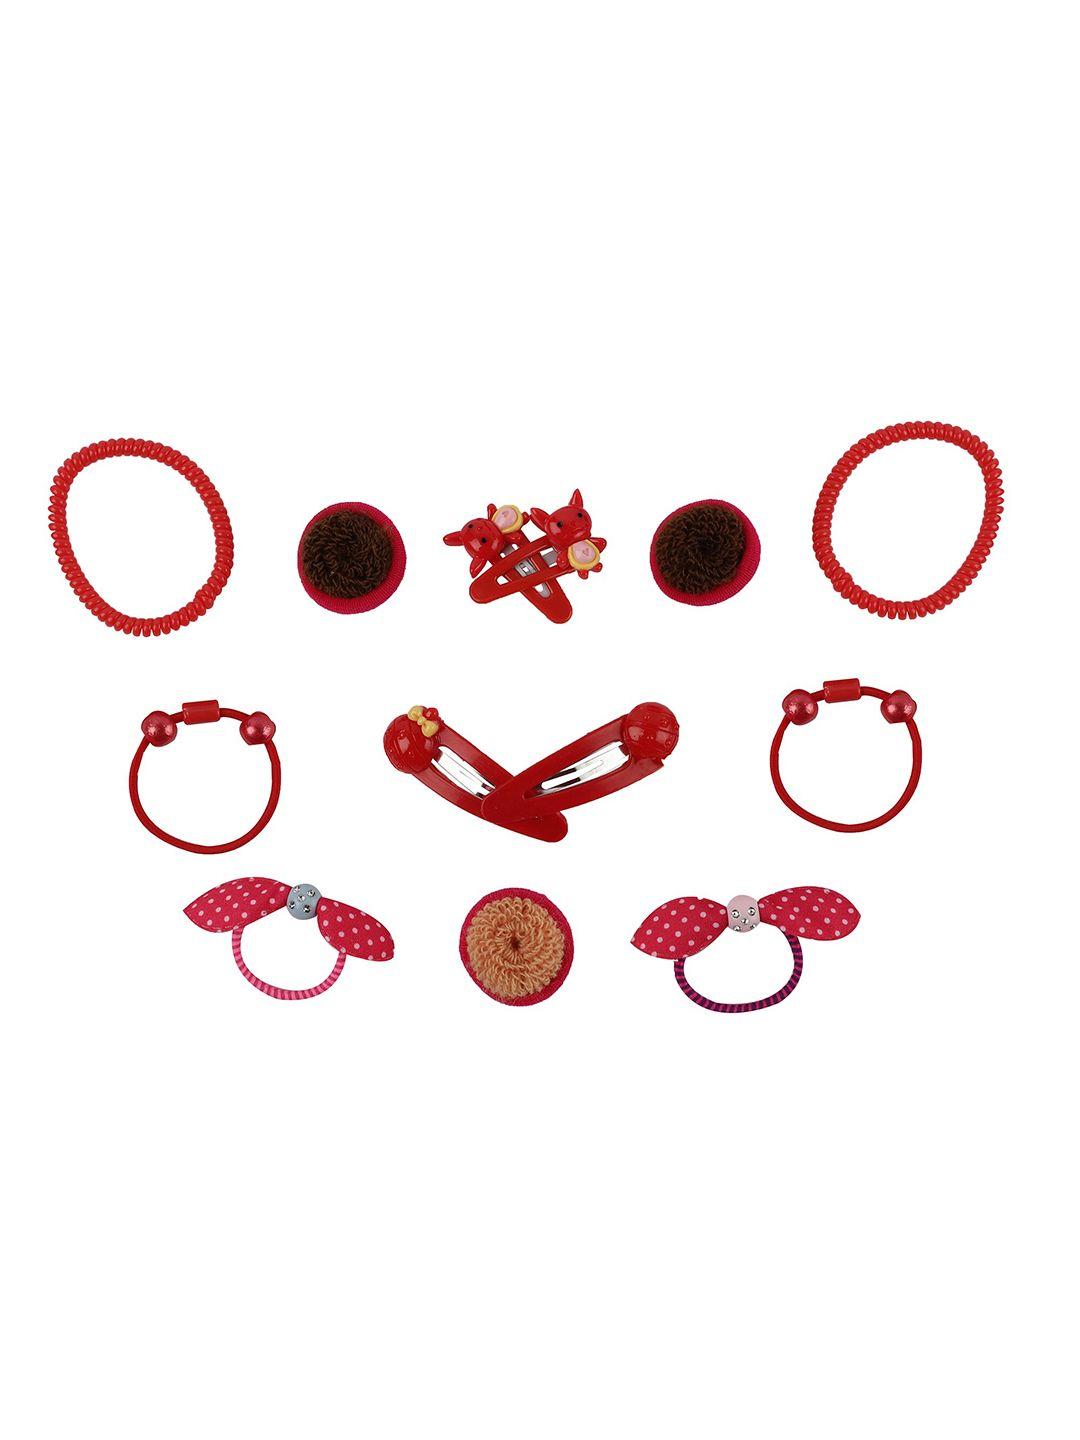 foliyaj girls set of 16 red hair accessory with bear shape storage box